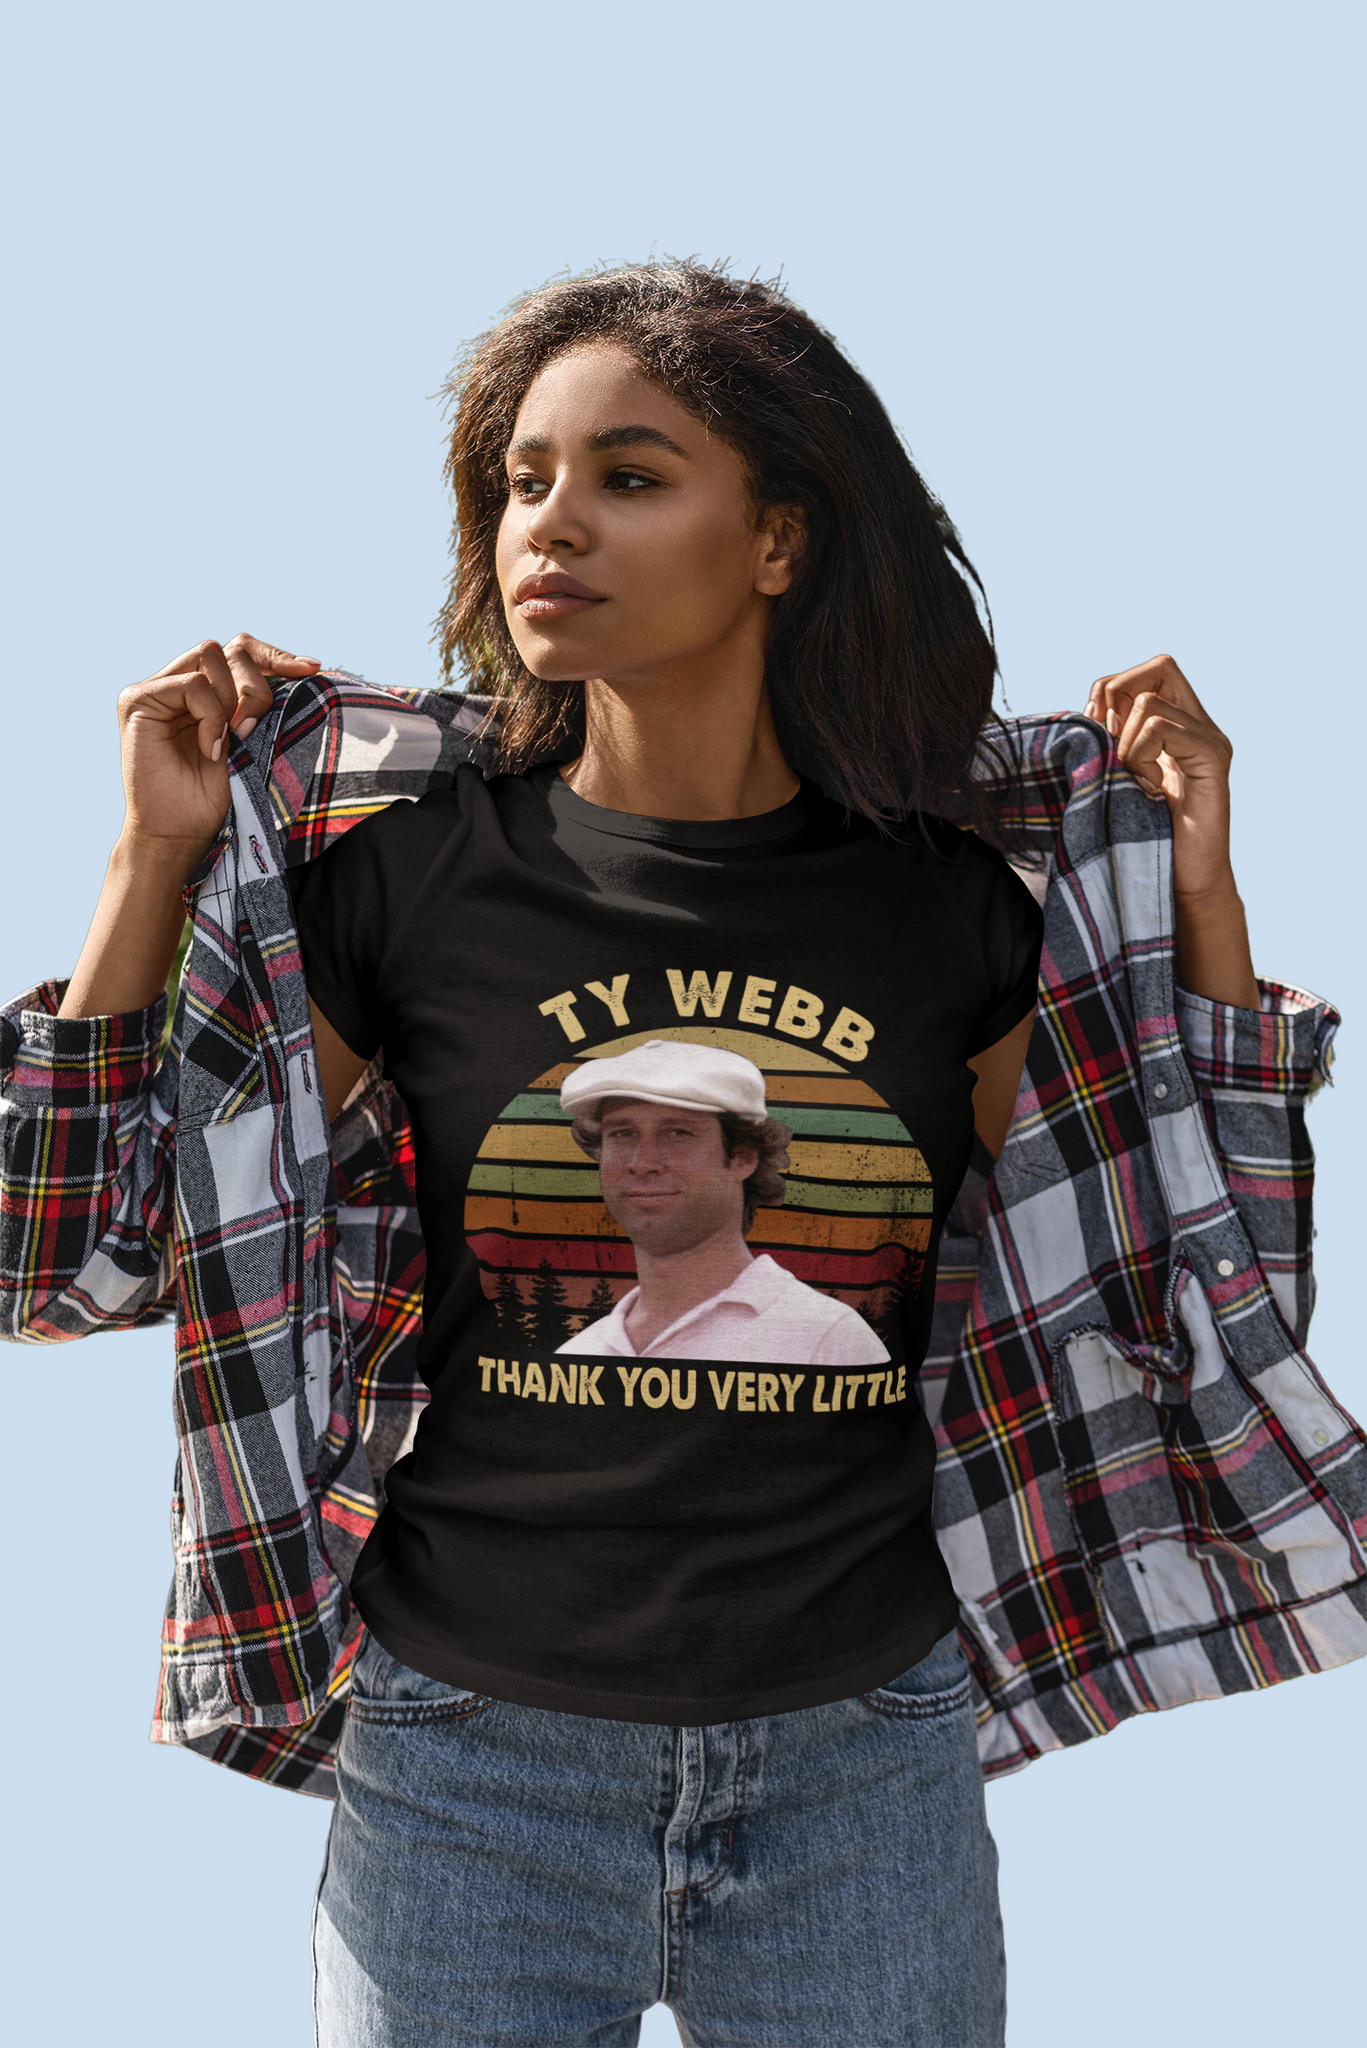 Caddyshack Vintage T Shirt, Ty Webb T Shirt, Ty Webb Thank You Very Little Tshirt